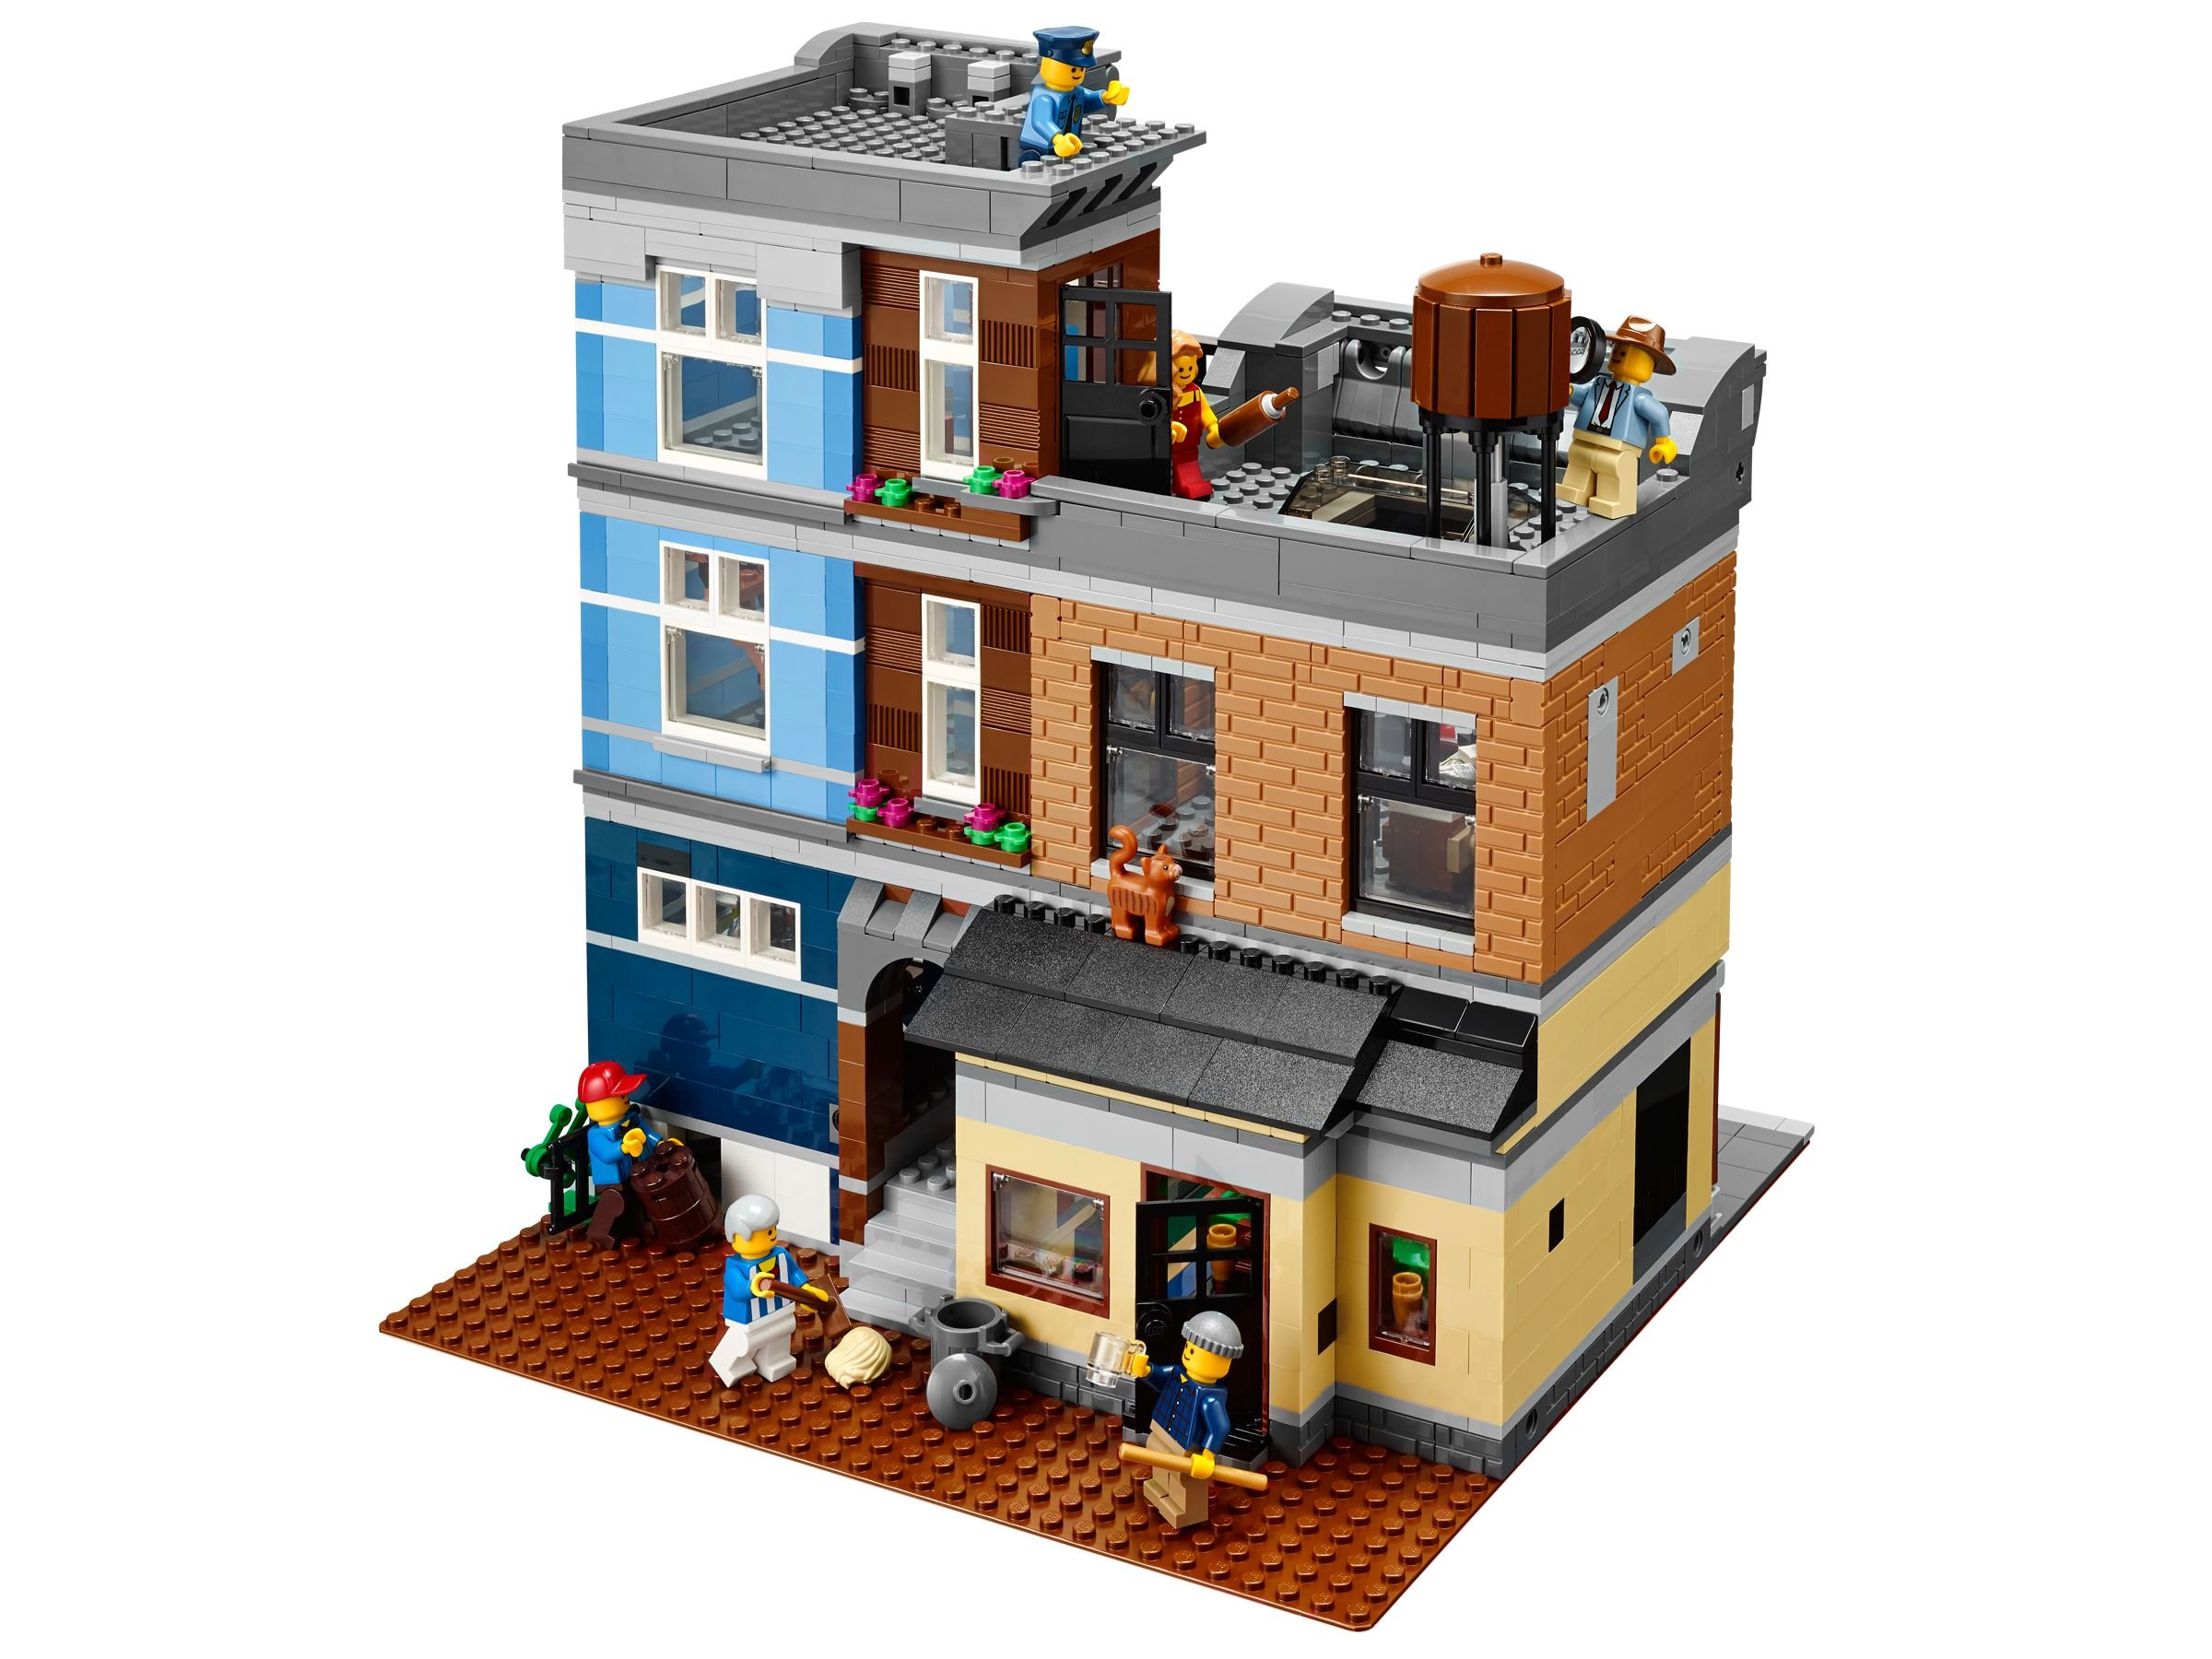 LEGO Advanced Models 10246 Detektivbüro LEGO_10246_alt3.jpg